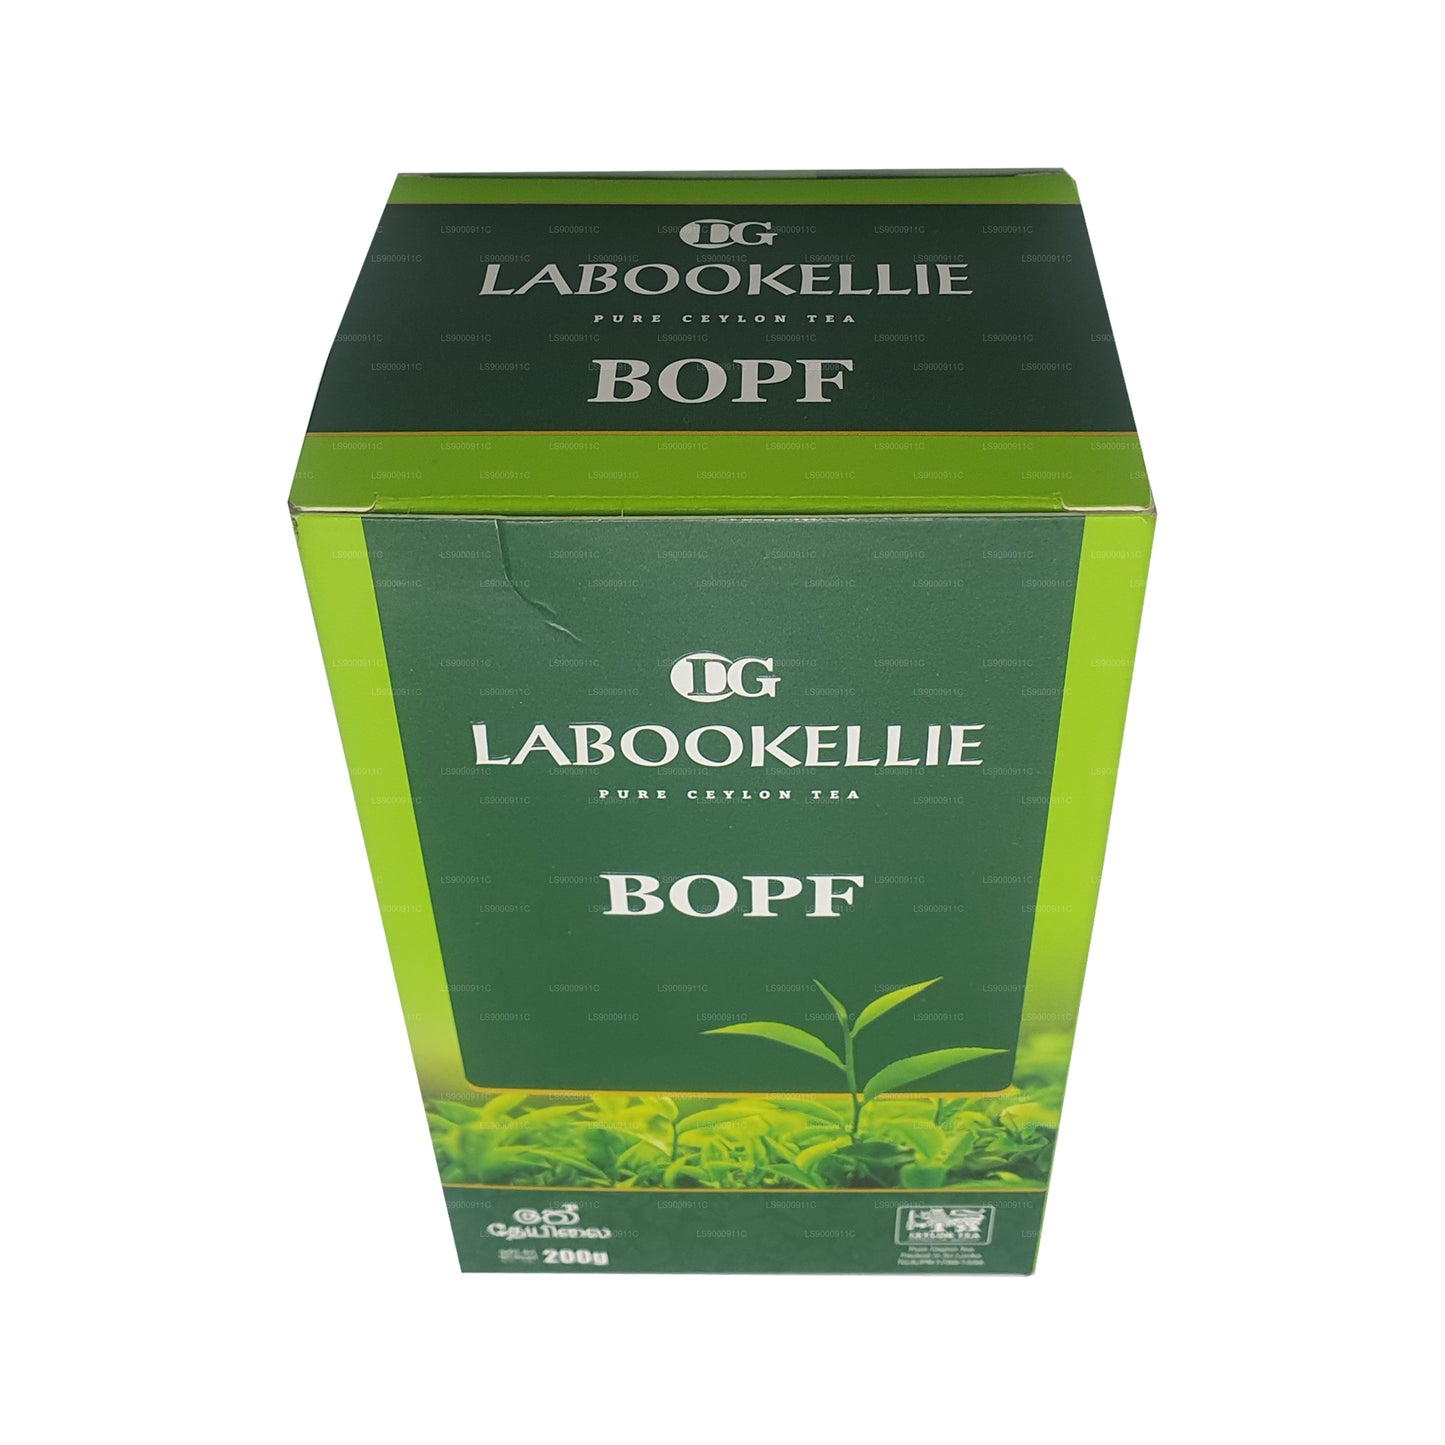 DG Labookellie BOPF thee (200 g)